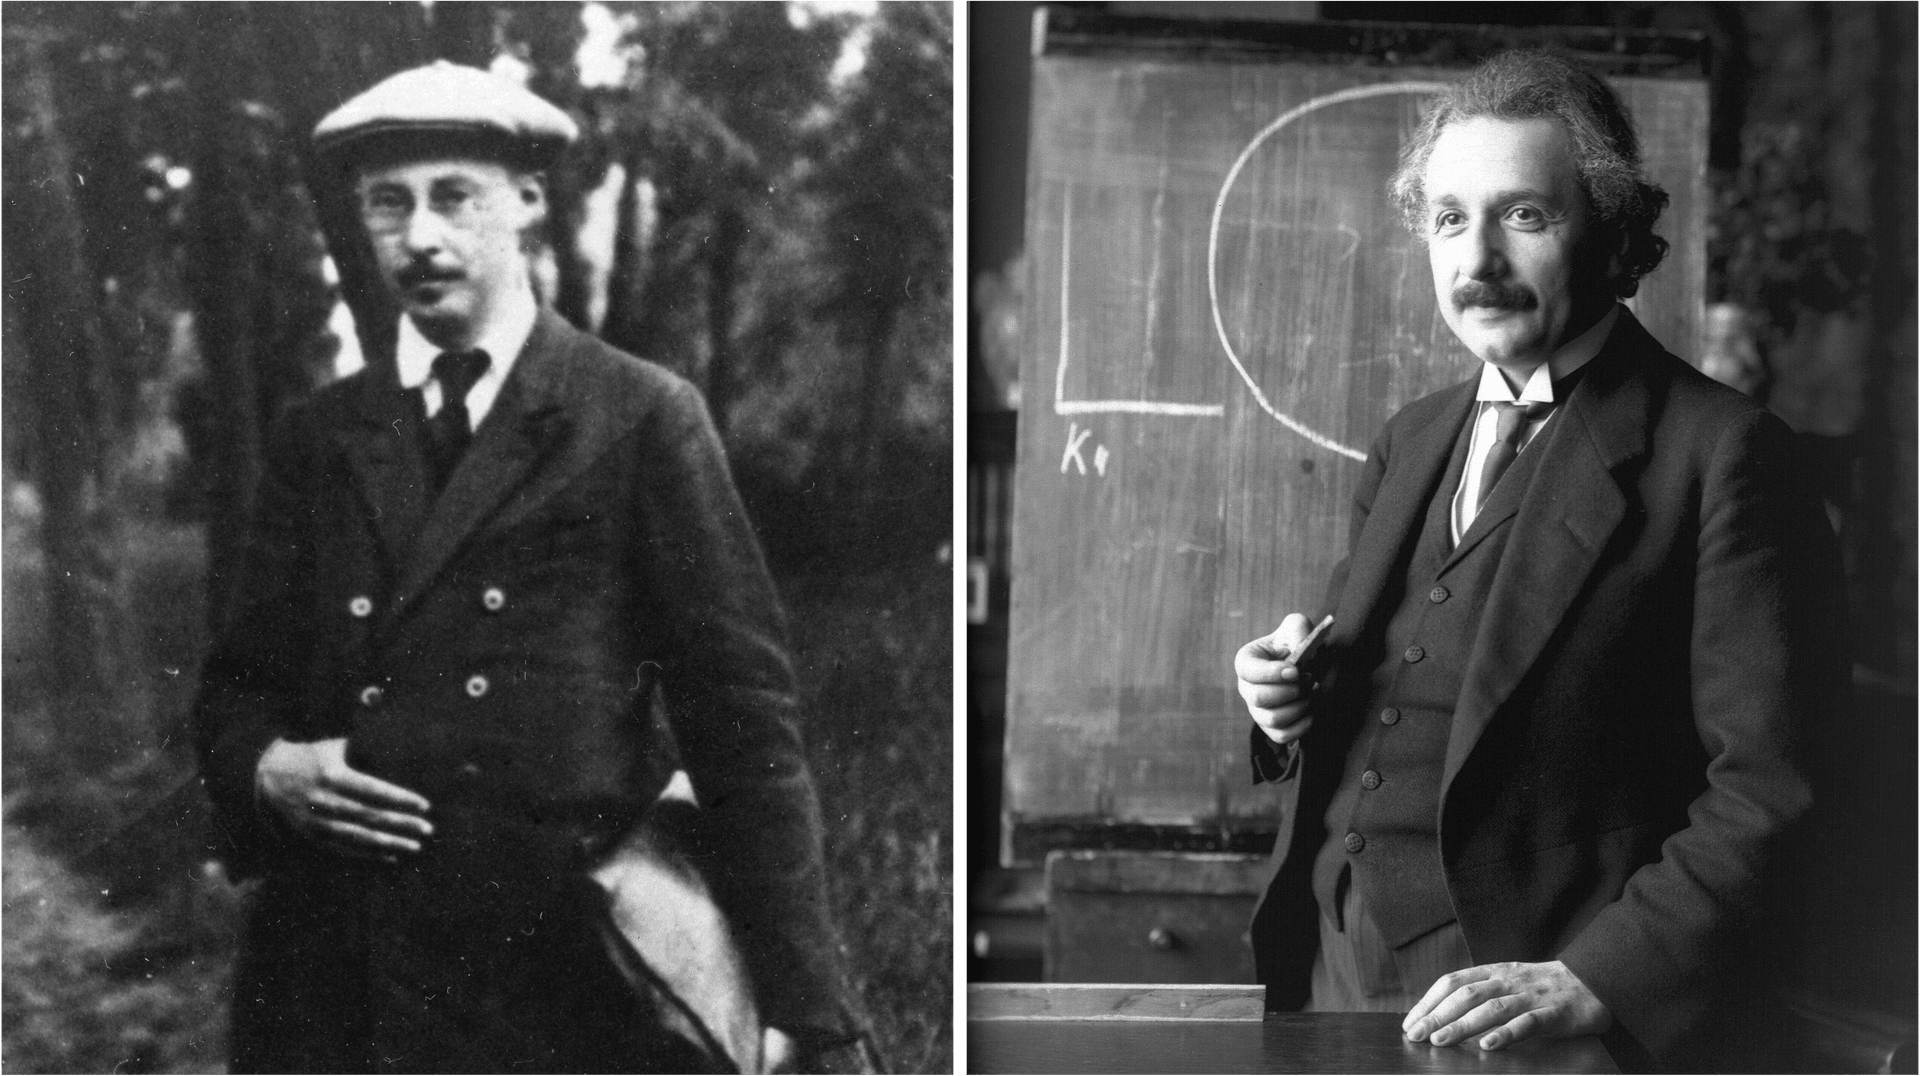 Photos of Friedmann (left) and Einstein (right)